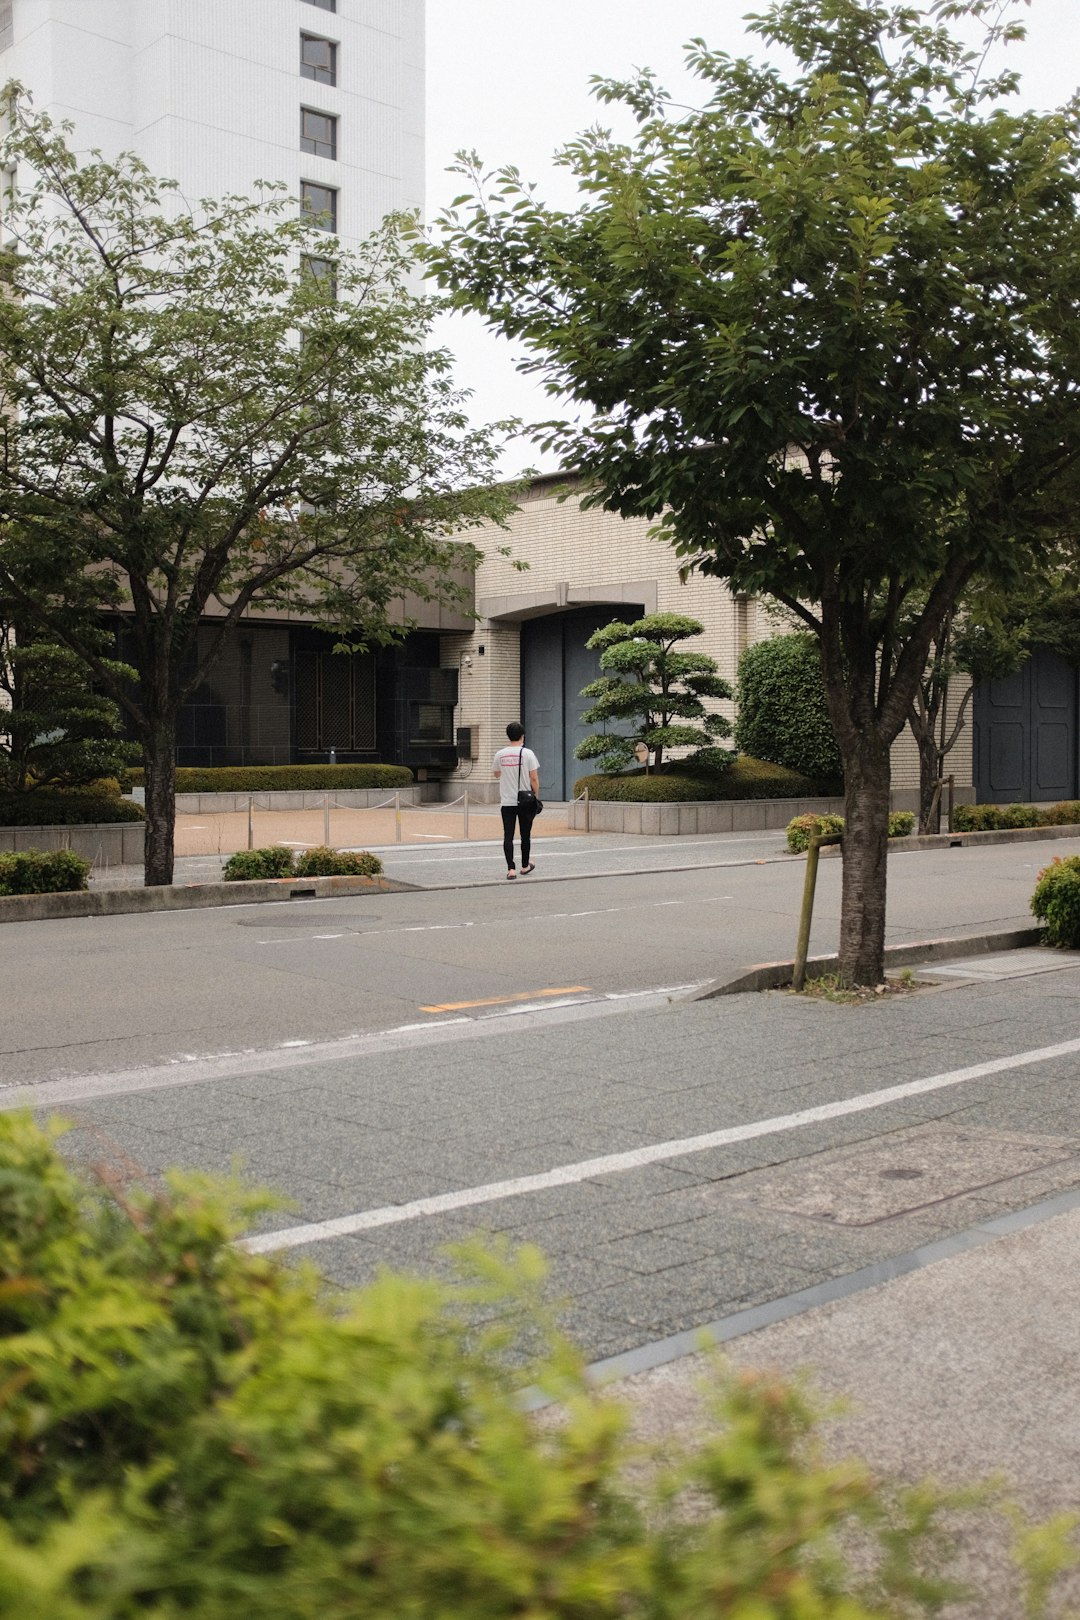 man in black jacket and black pants walking on sidewalk during daytime